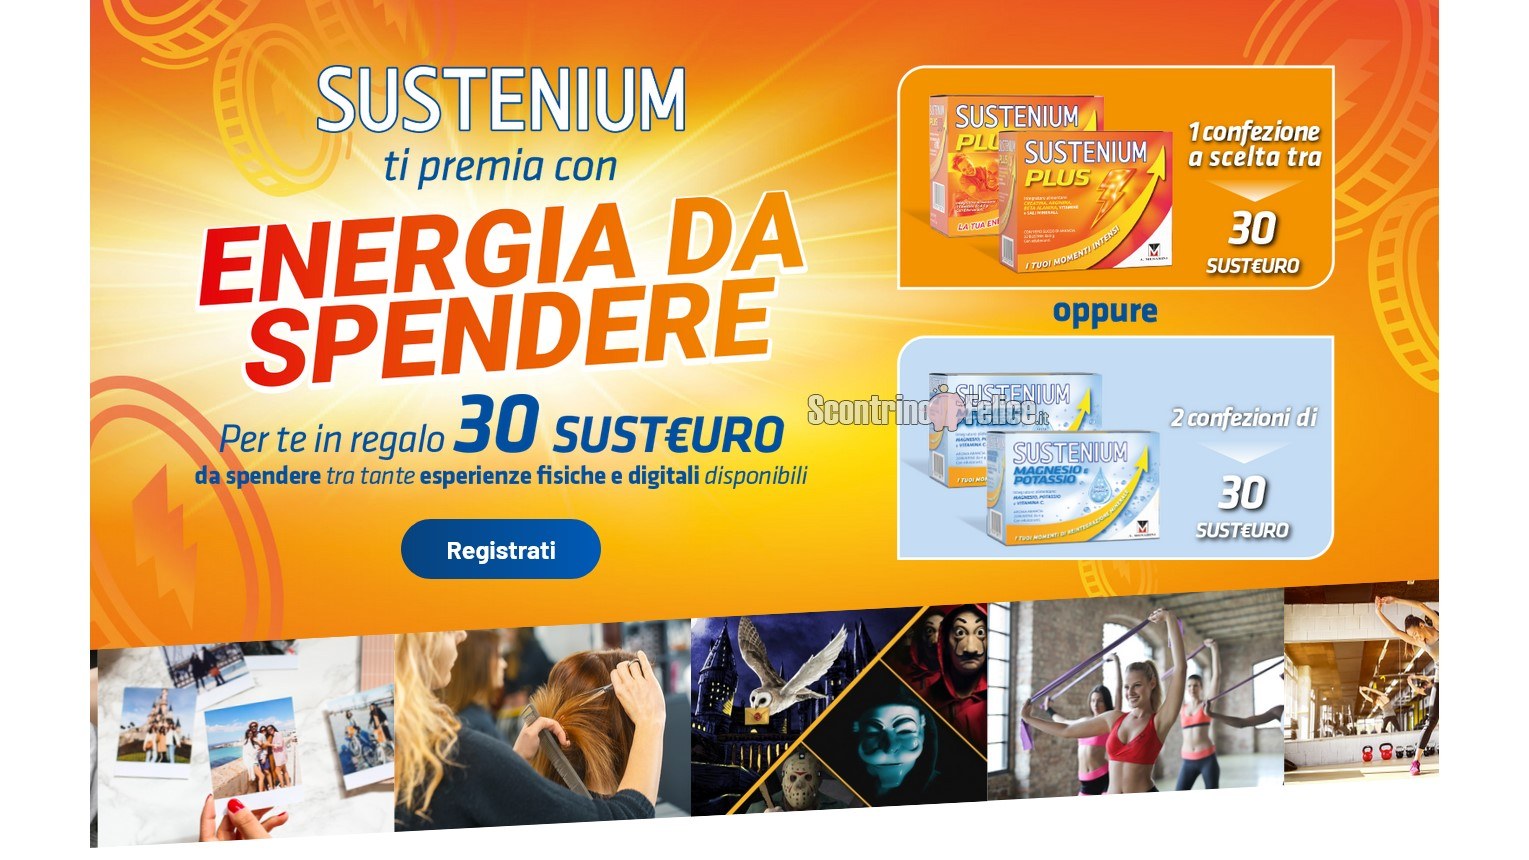 Premio Sicuro Sustenium “Energia da spendere”: ricevi crediti da convertire in voucher esperienze!